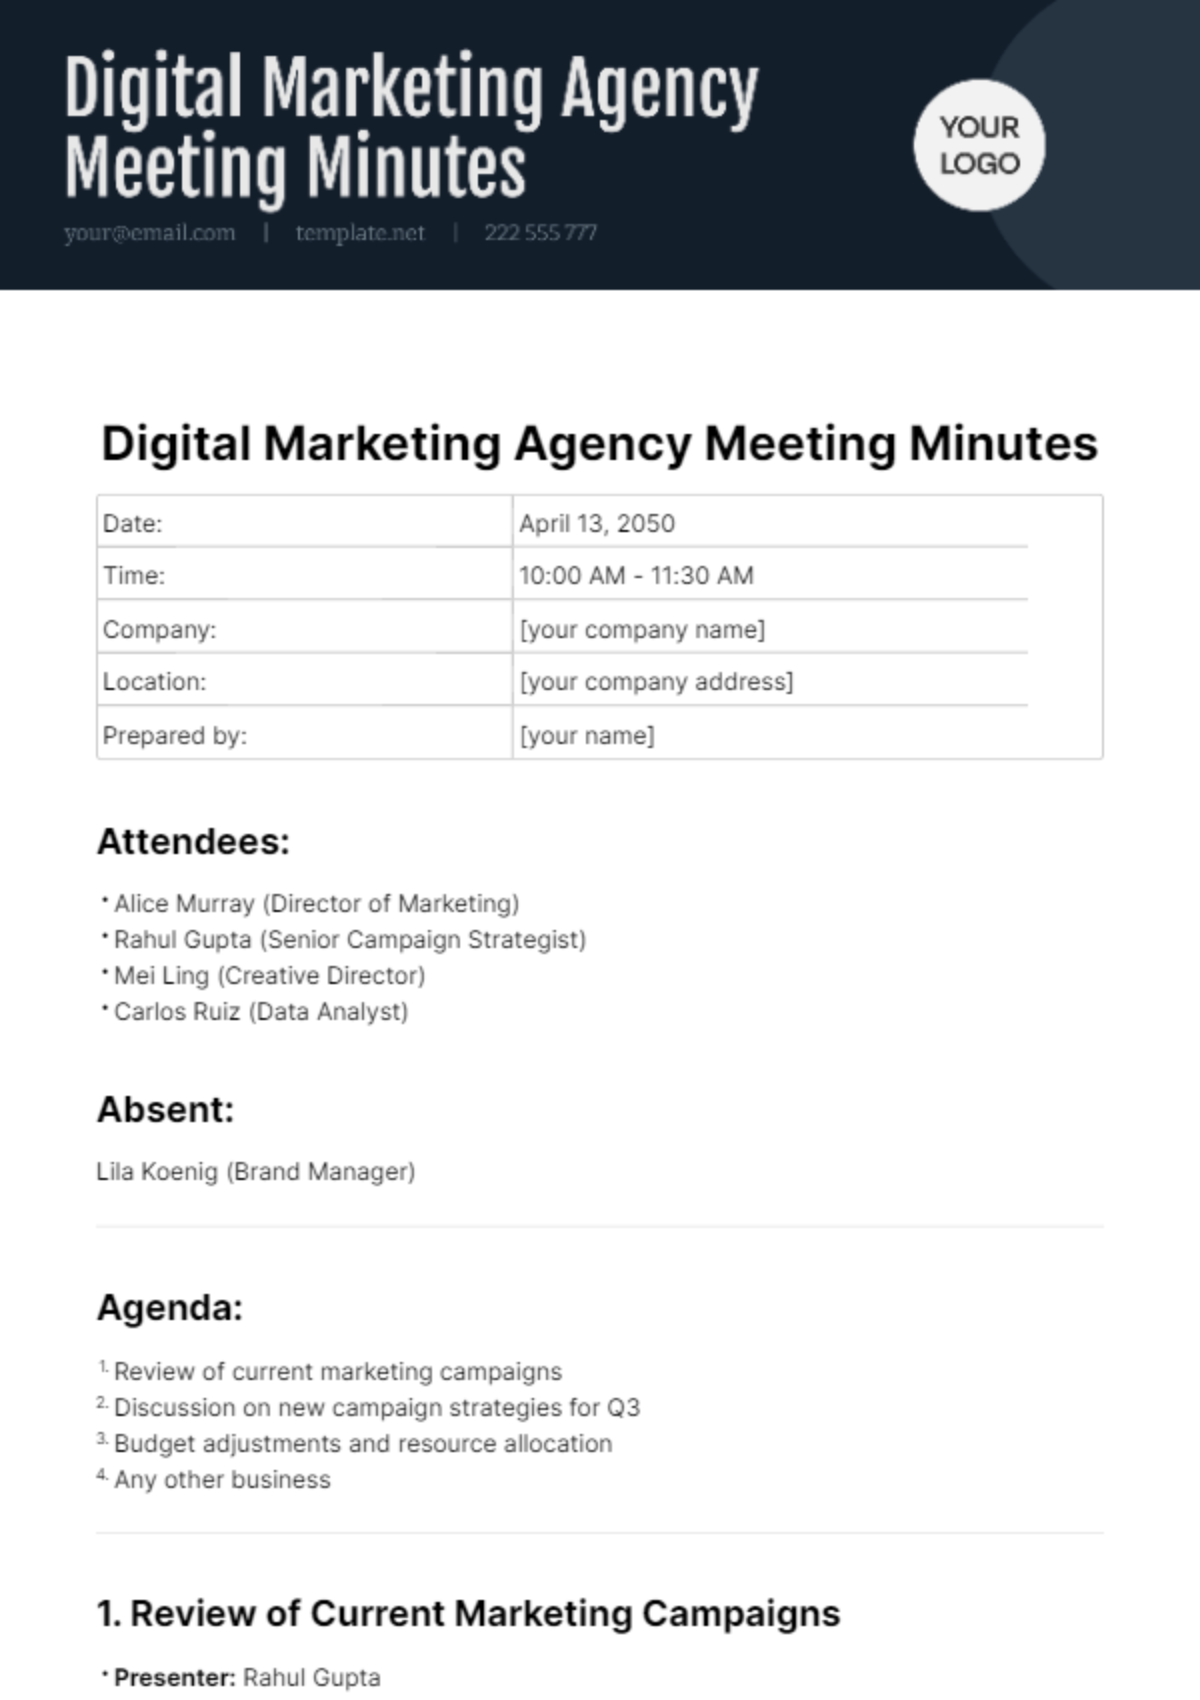 Digital Marketing Agency Meeting Minutes Template